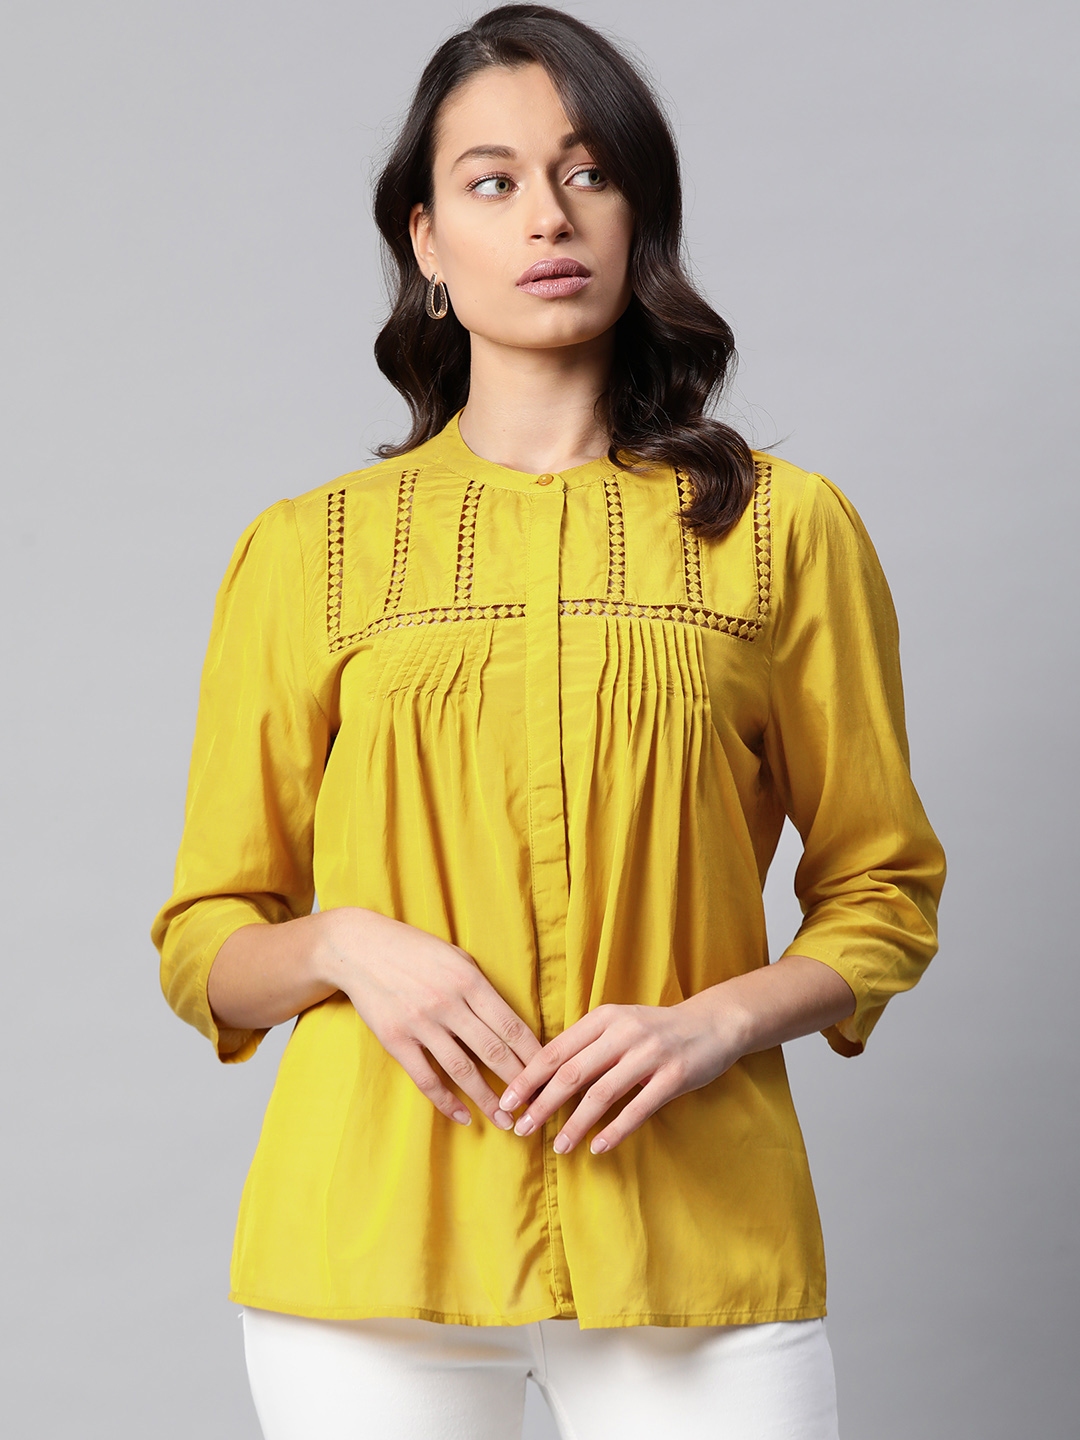 Buy Marks & Spencer Yellow Regular Top - Tops for Women 15246102 | Myntra